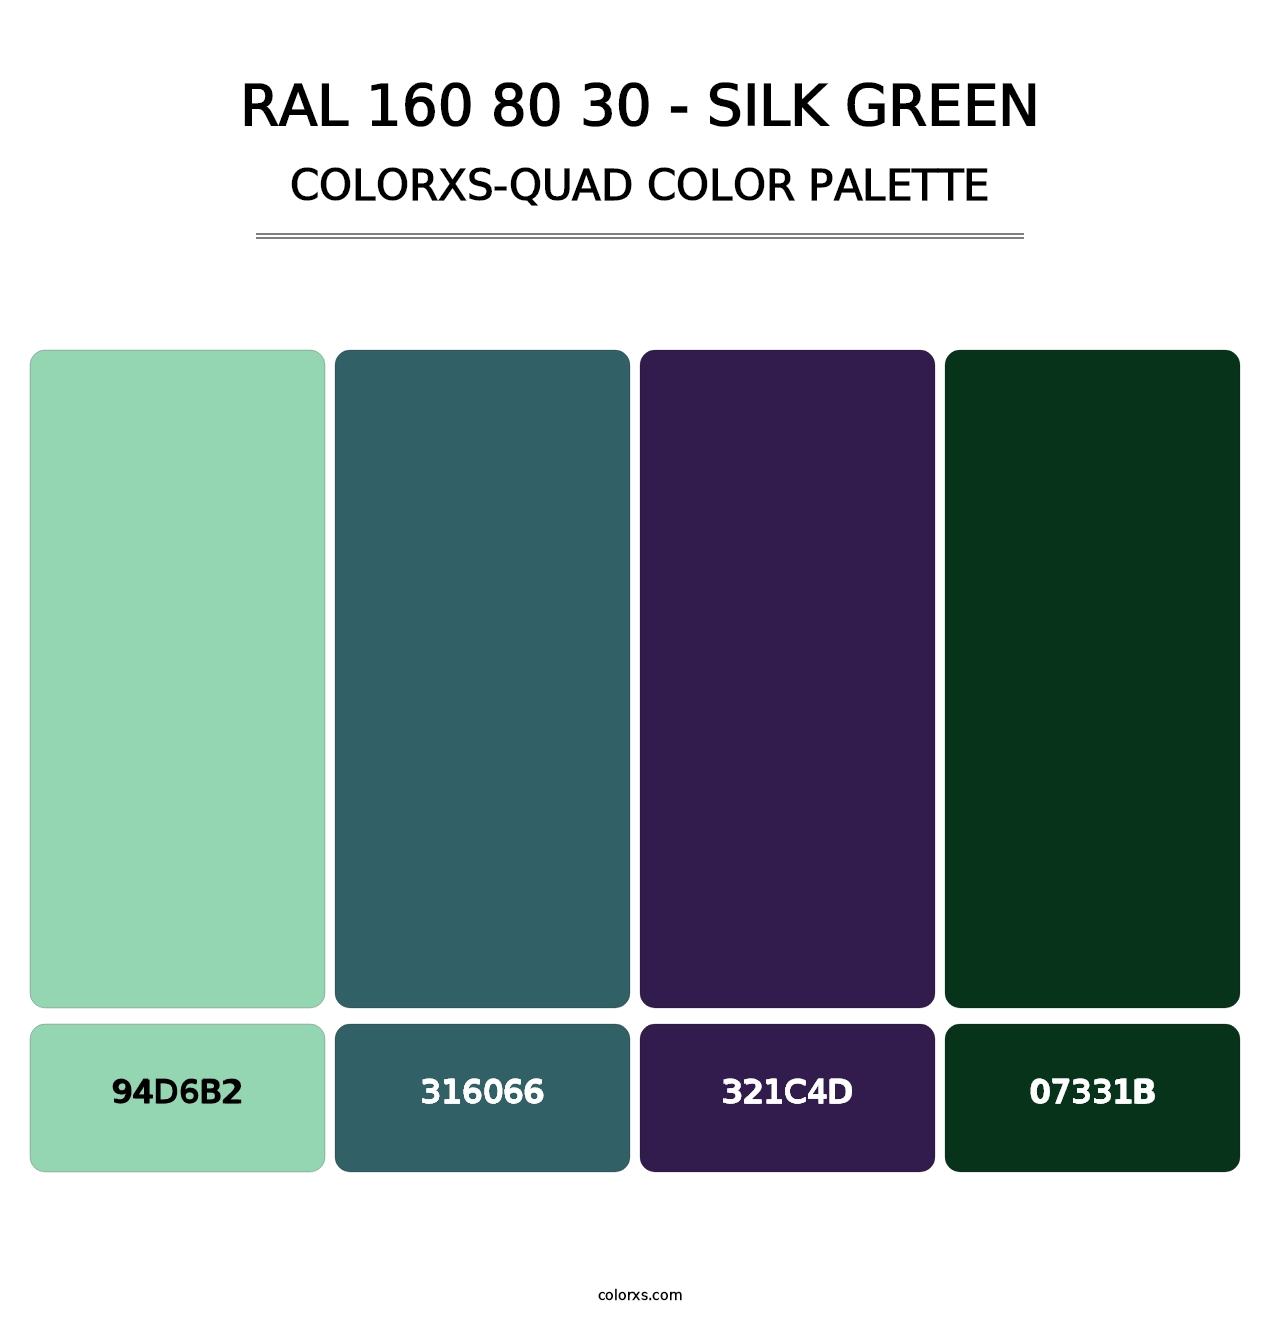 RAL 160 80 30 - Silk Green - Colorxs Quad Palette